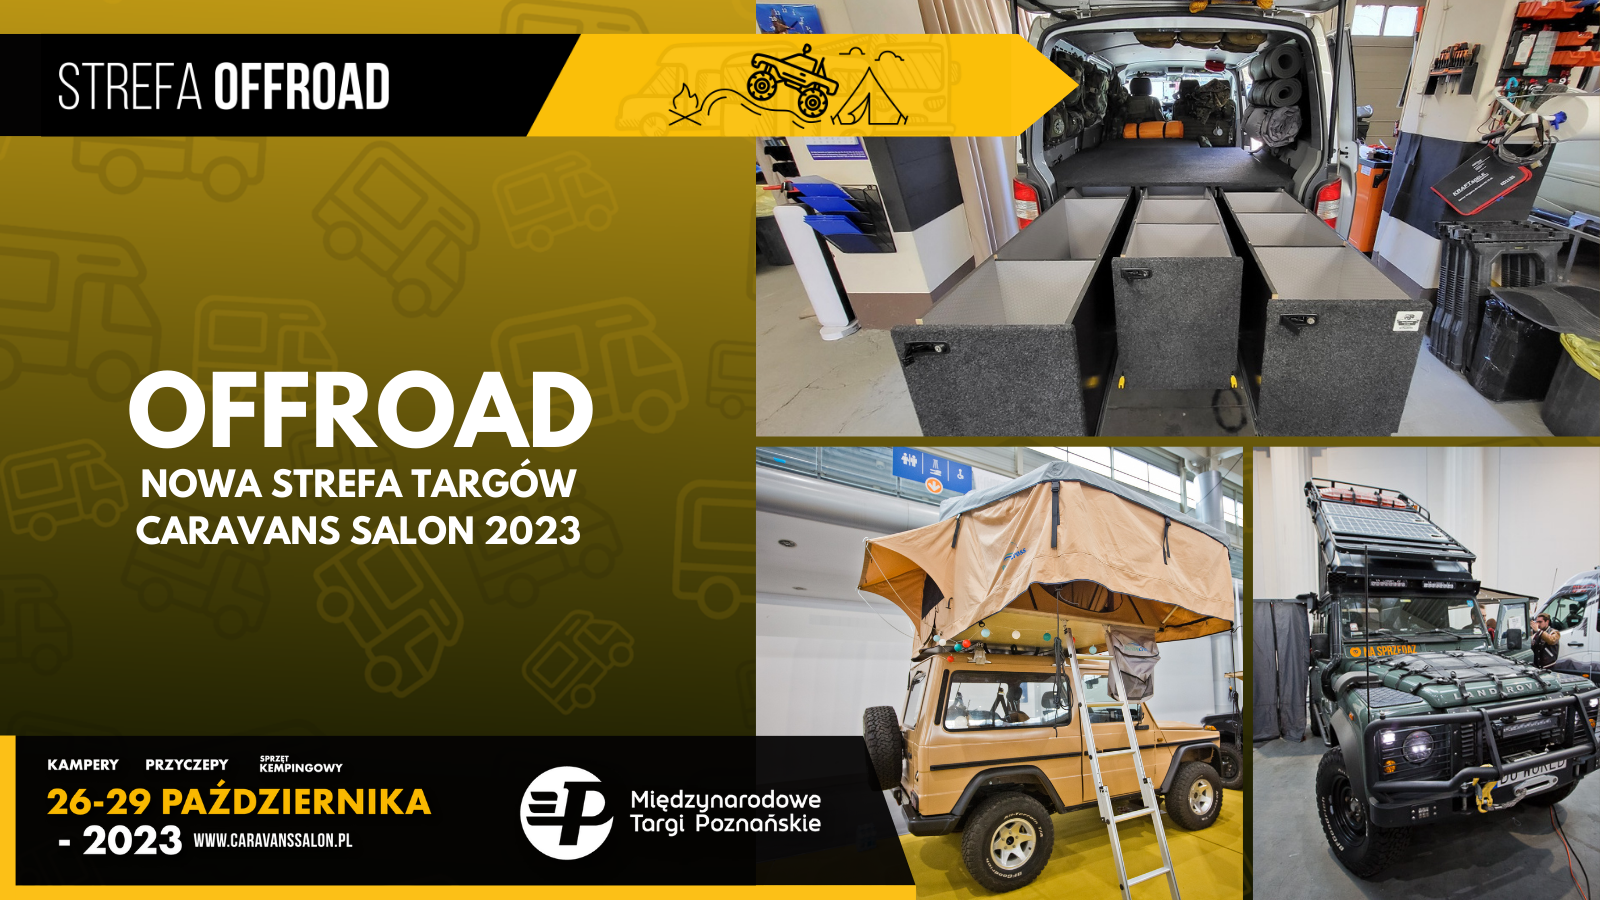 Off-road zone at Caravans Salon 2023